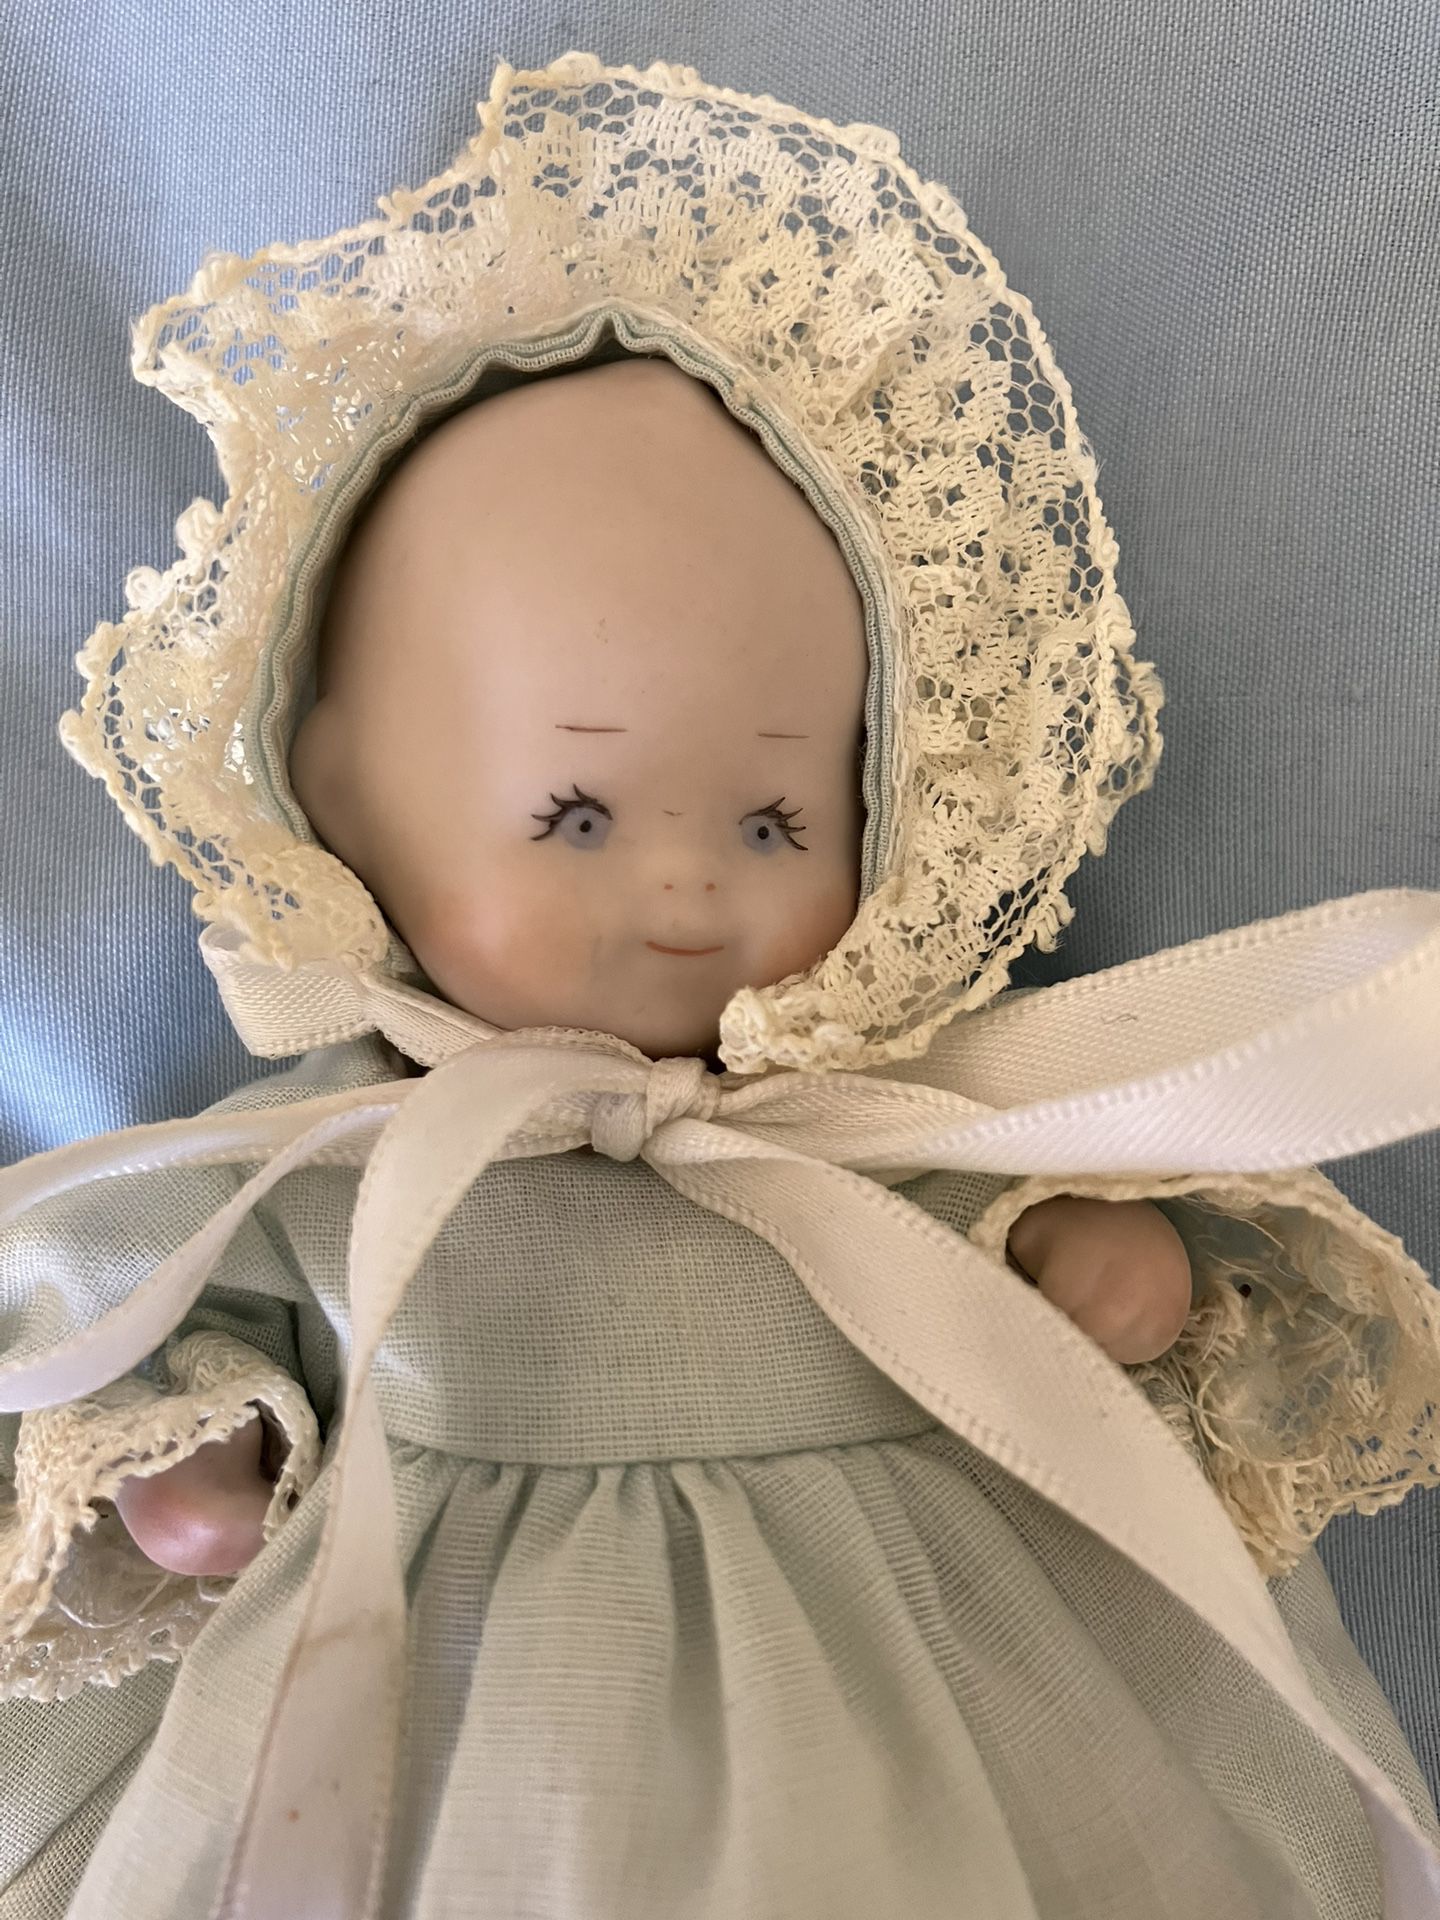 1981 Phyllis Parkins 5.5" Porcelain doll